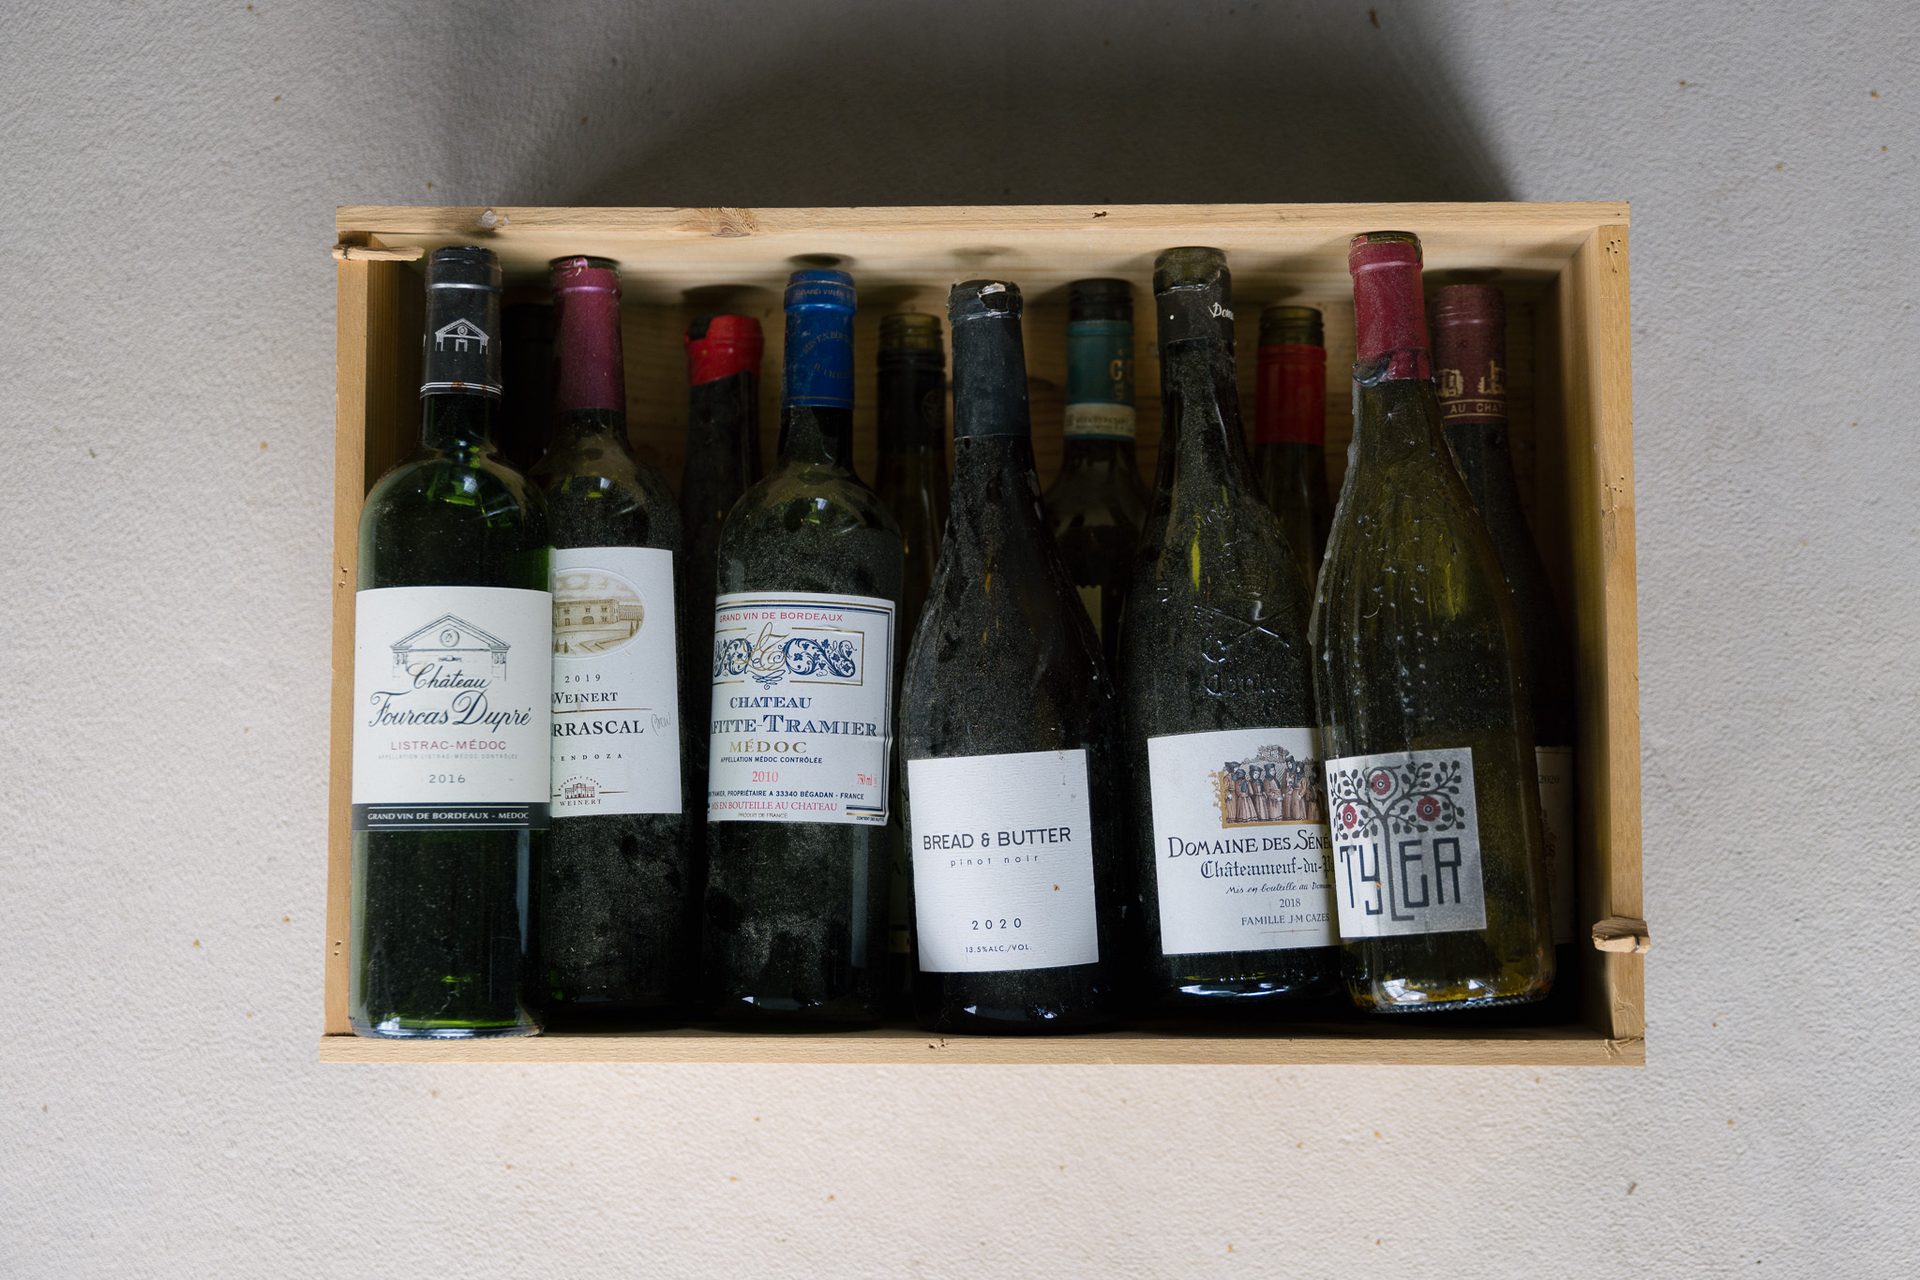 tomme vinflasker i en treboks p&#xE5; et lyst murgulv.